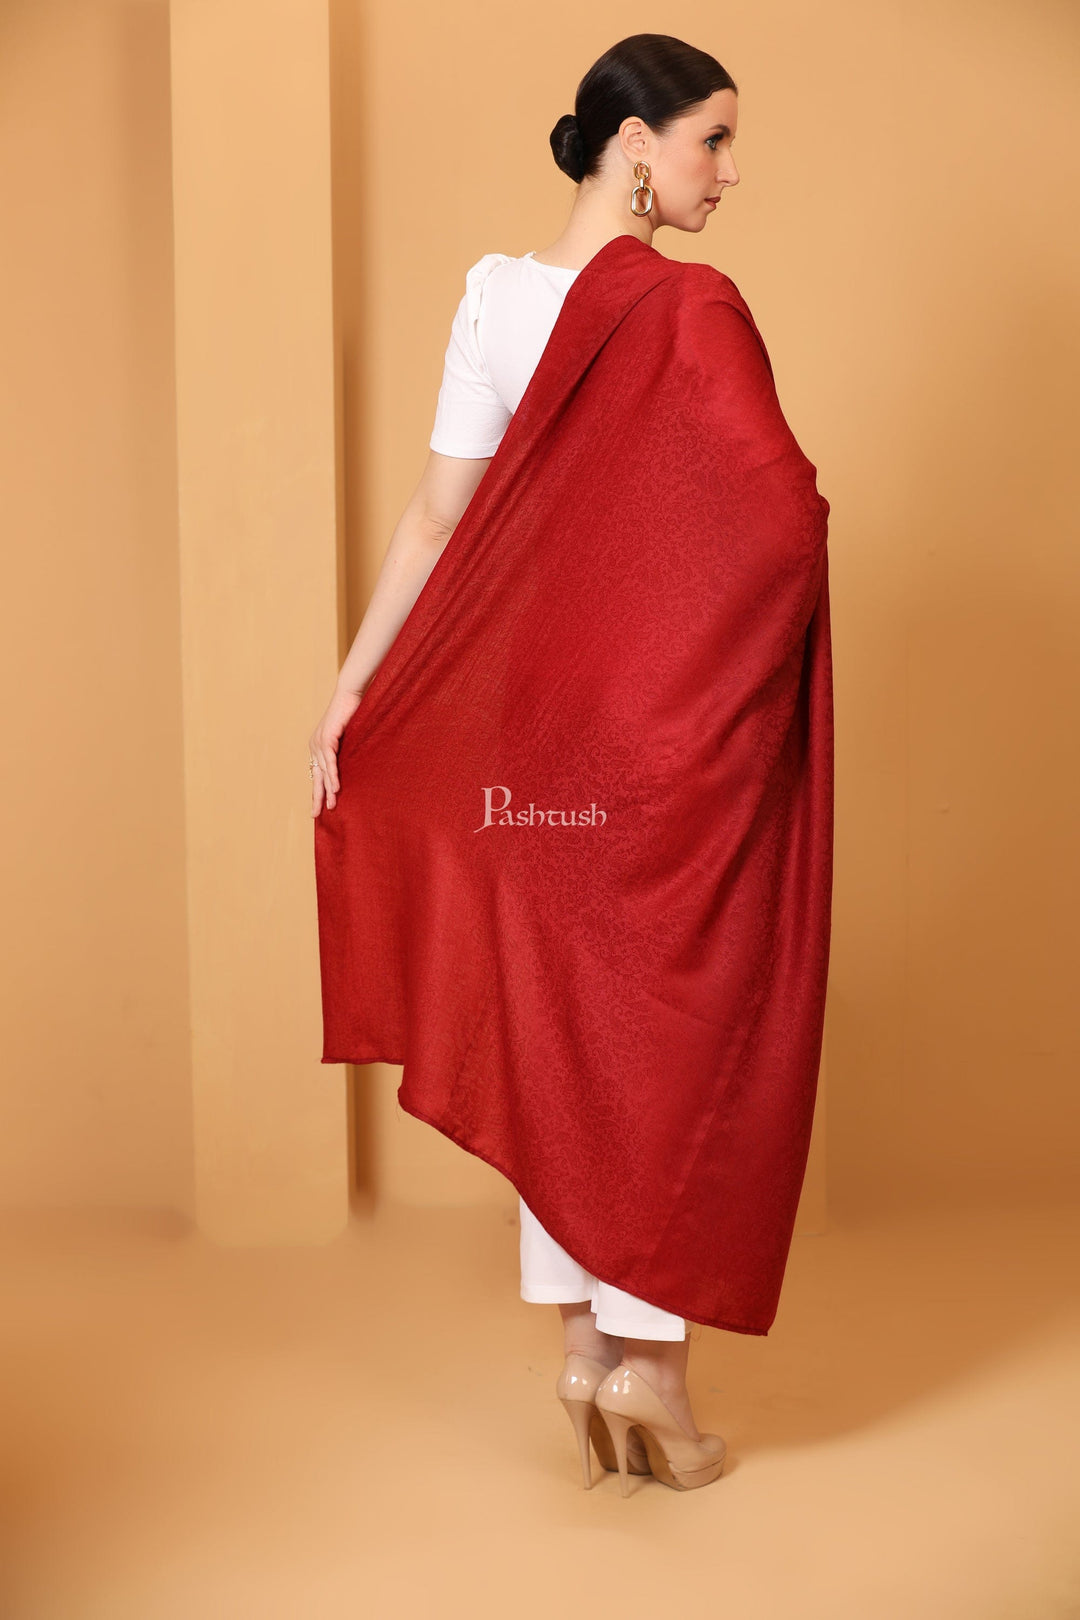 Pashtush India Womens Shawls Pashtush Womens Fine Wool Shawl, Self Paisley Weave, Extra Soft, Warm and Light Weight, Maroon